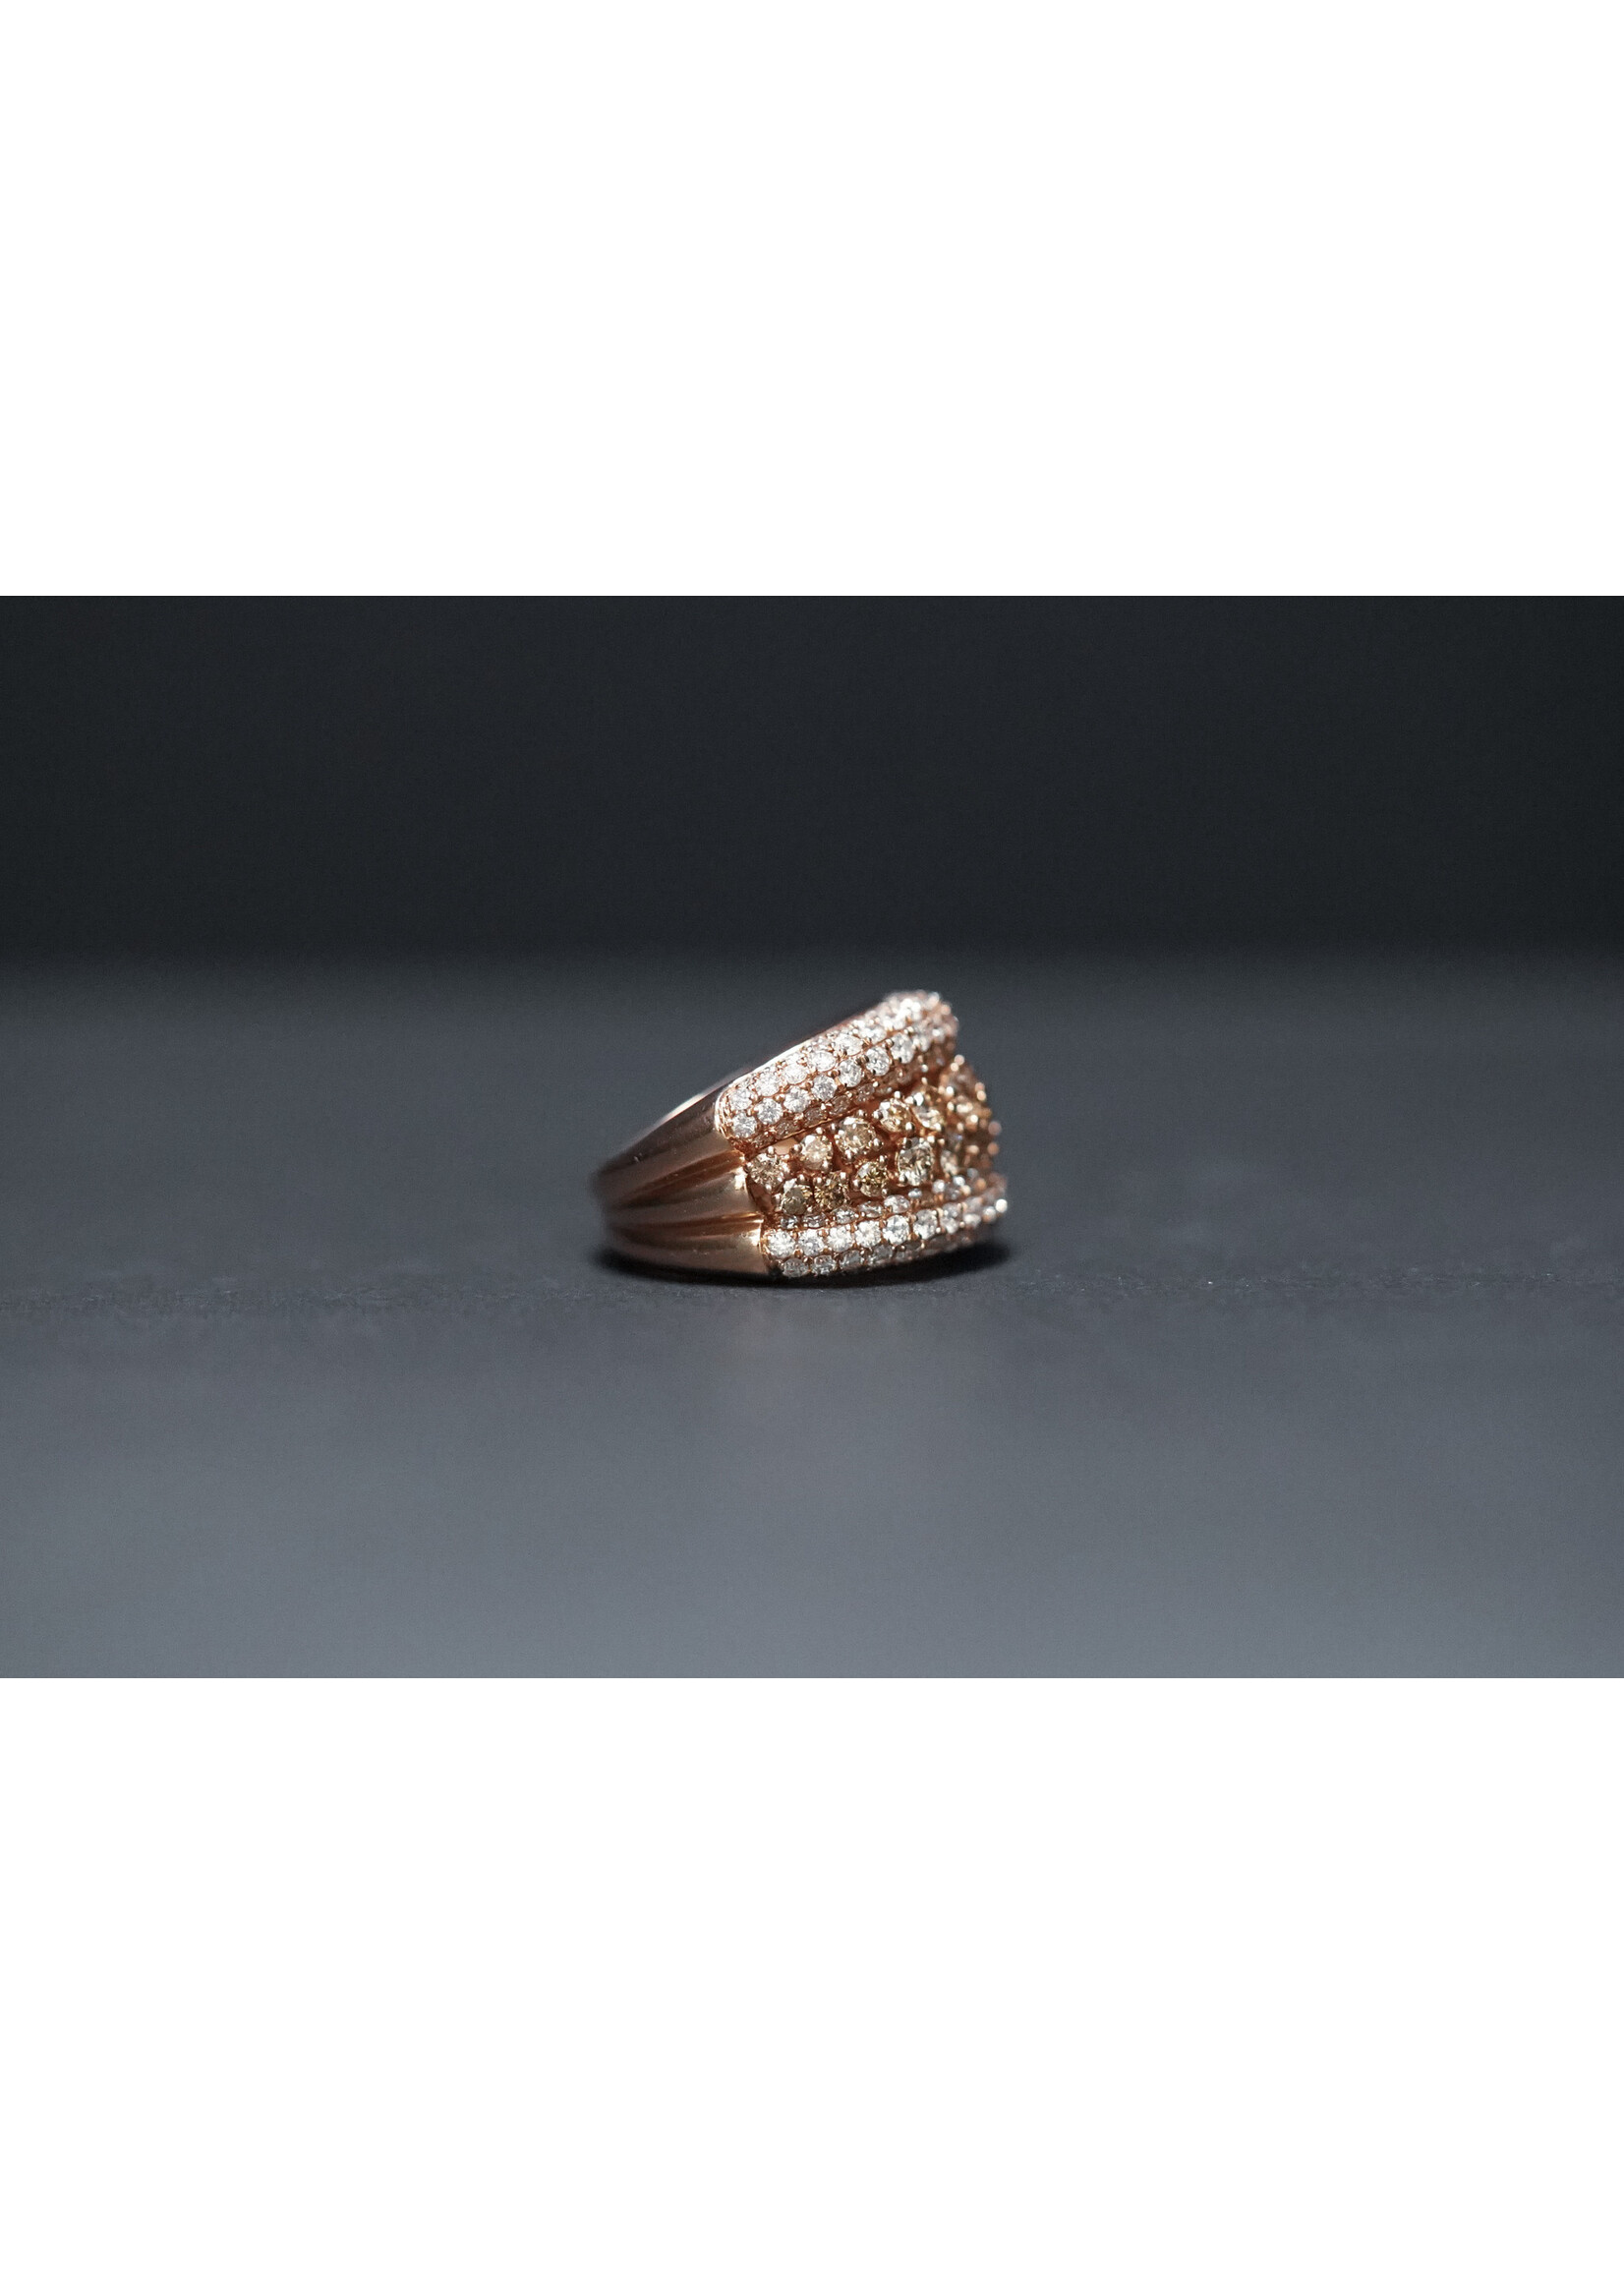 14KR 10.80g 3.90ctw Fancy Color Diamond Fashion Ring (size 7)